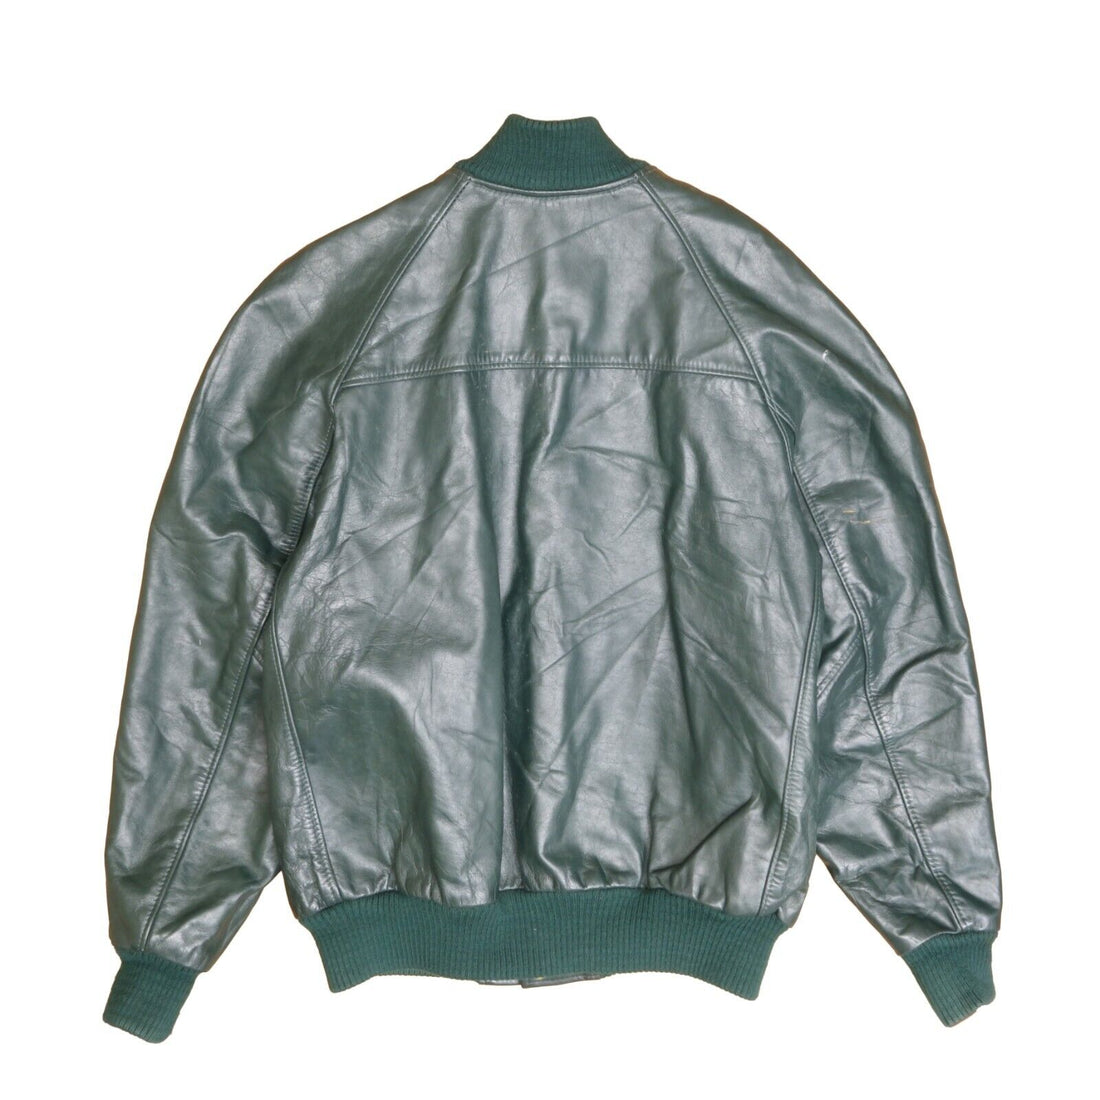 Vintage Crescent School Leather Varsity Jacket Size 46 Tall Green